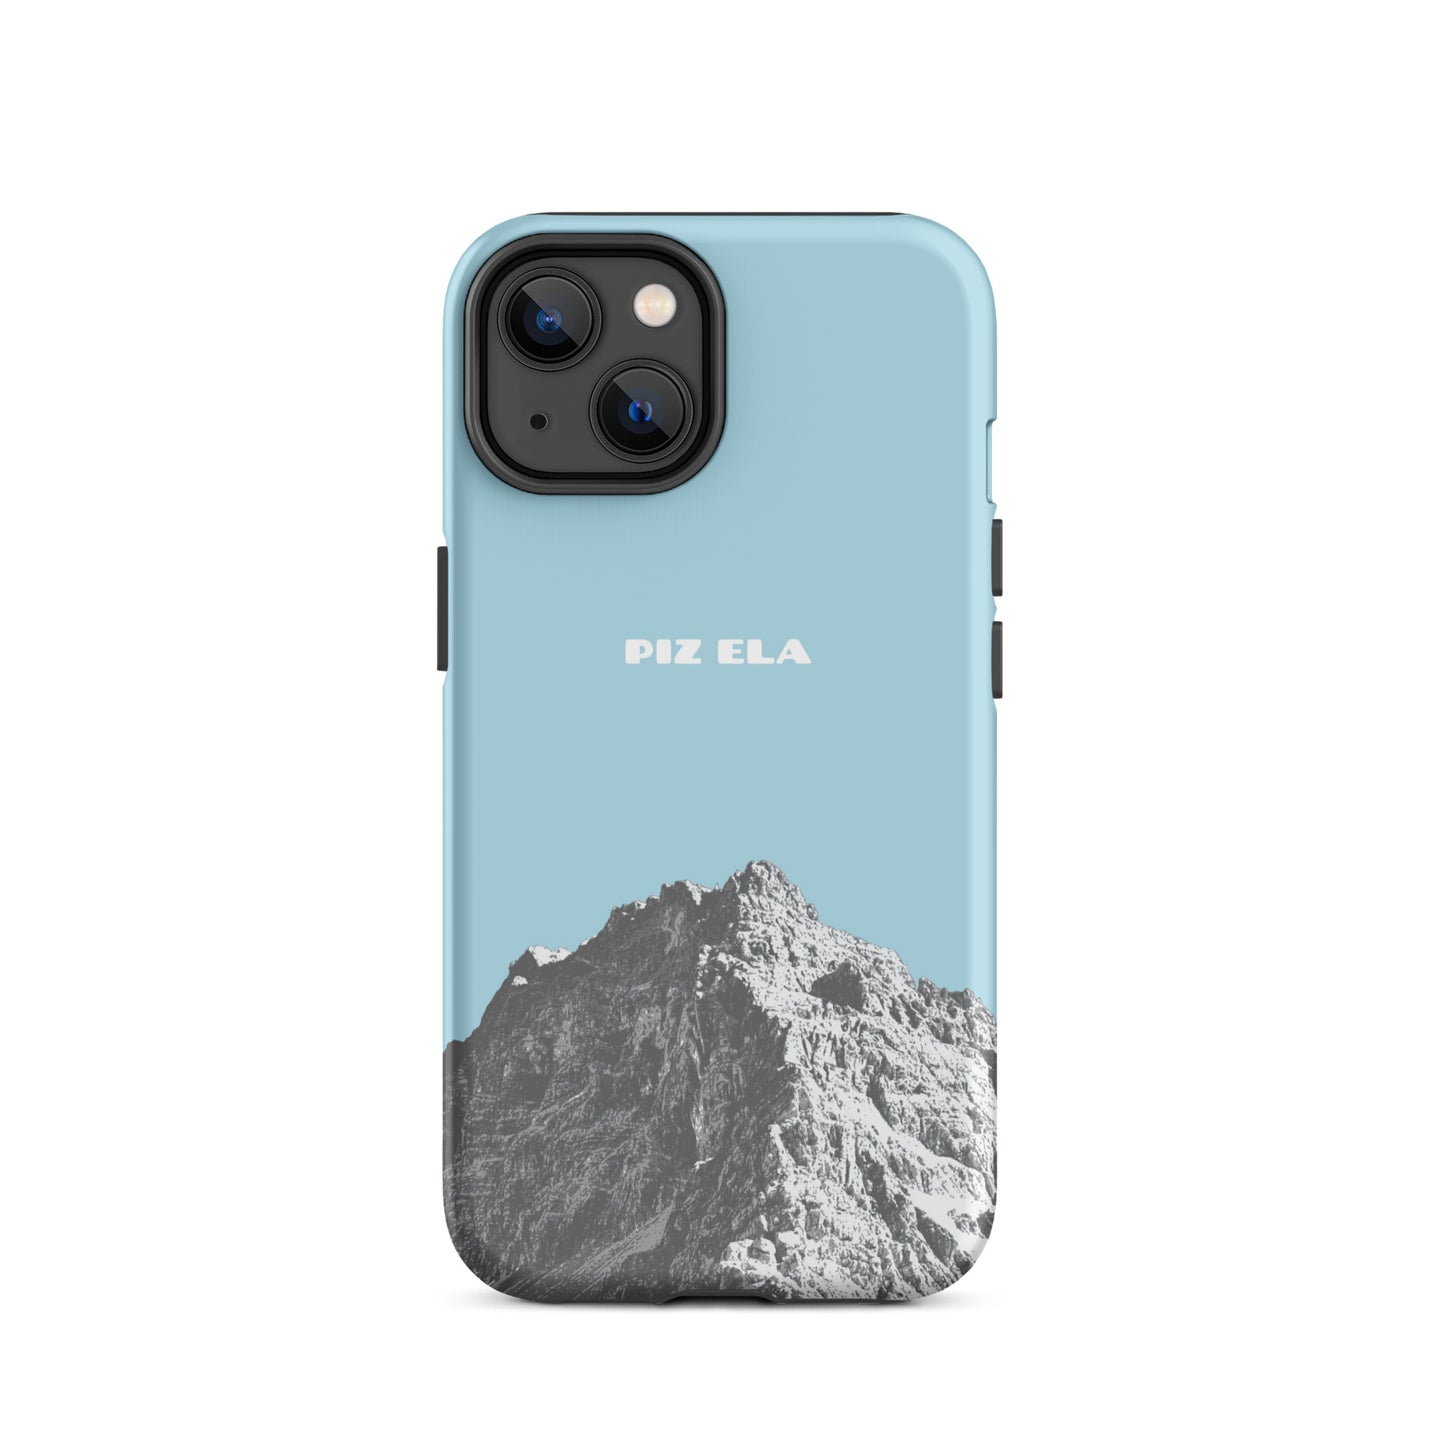 iPhone Case - Piz Ela - Hellblau